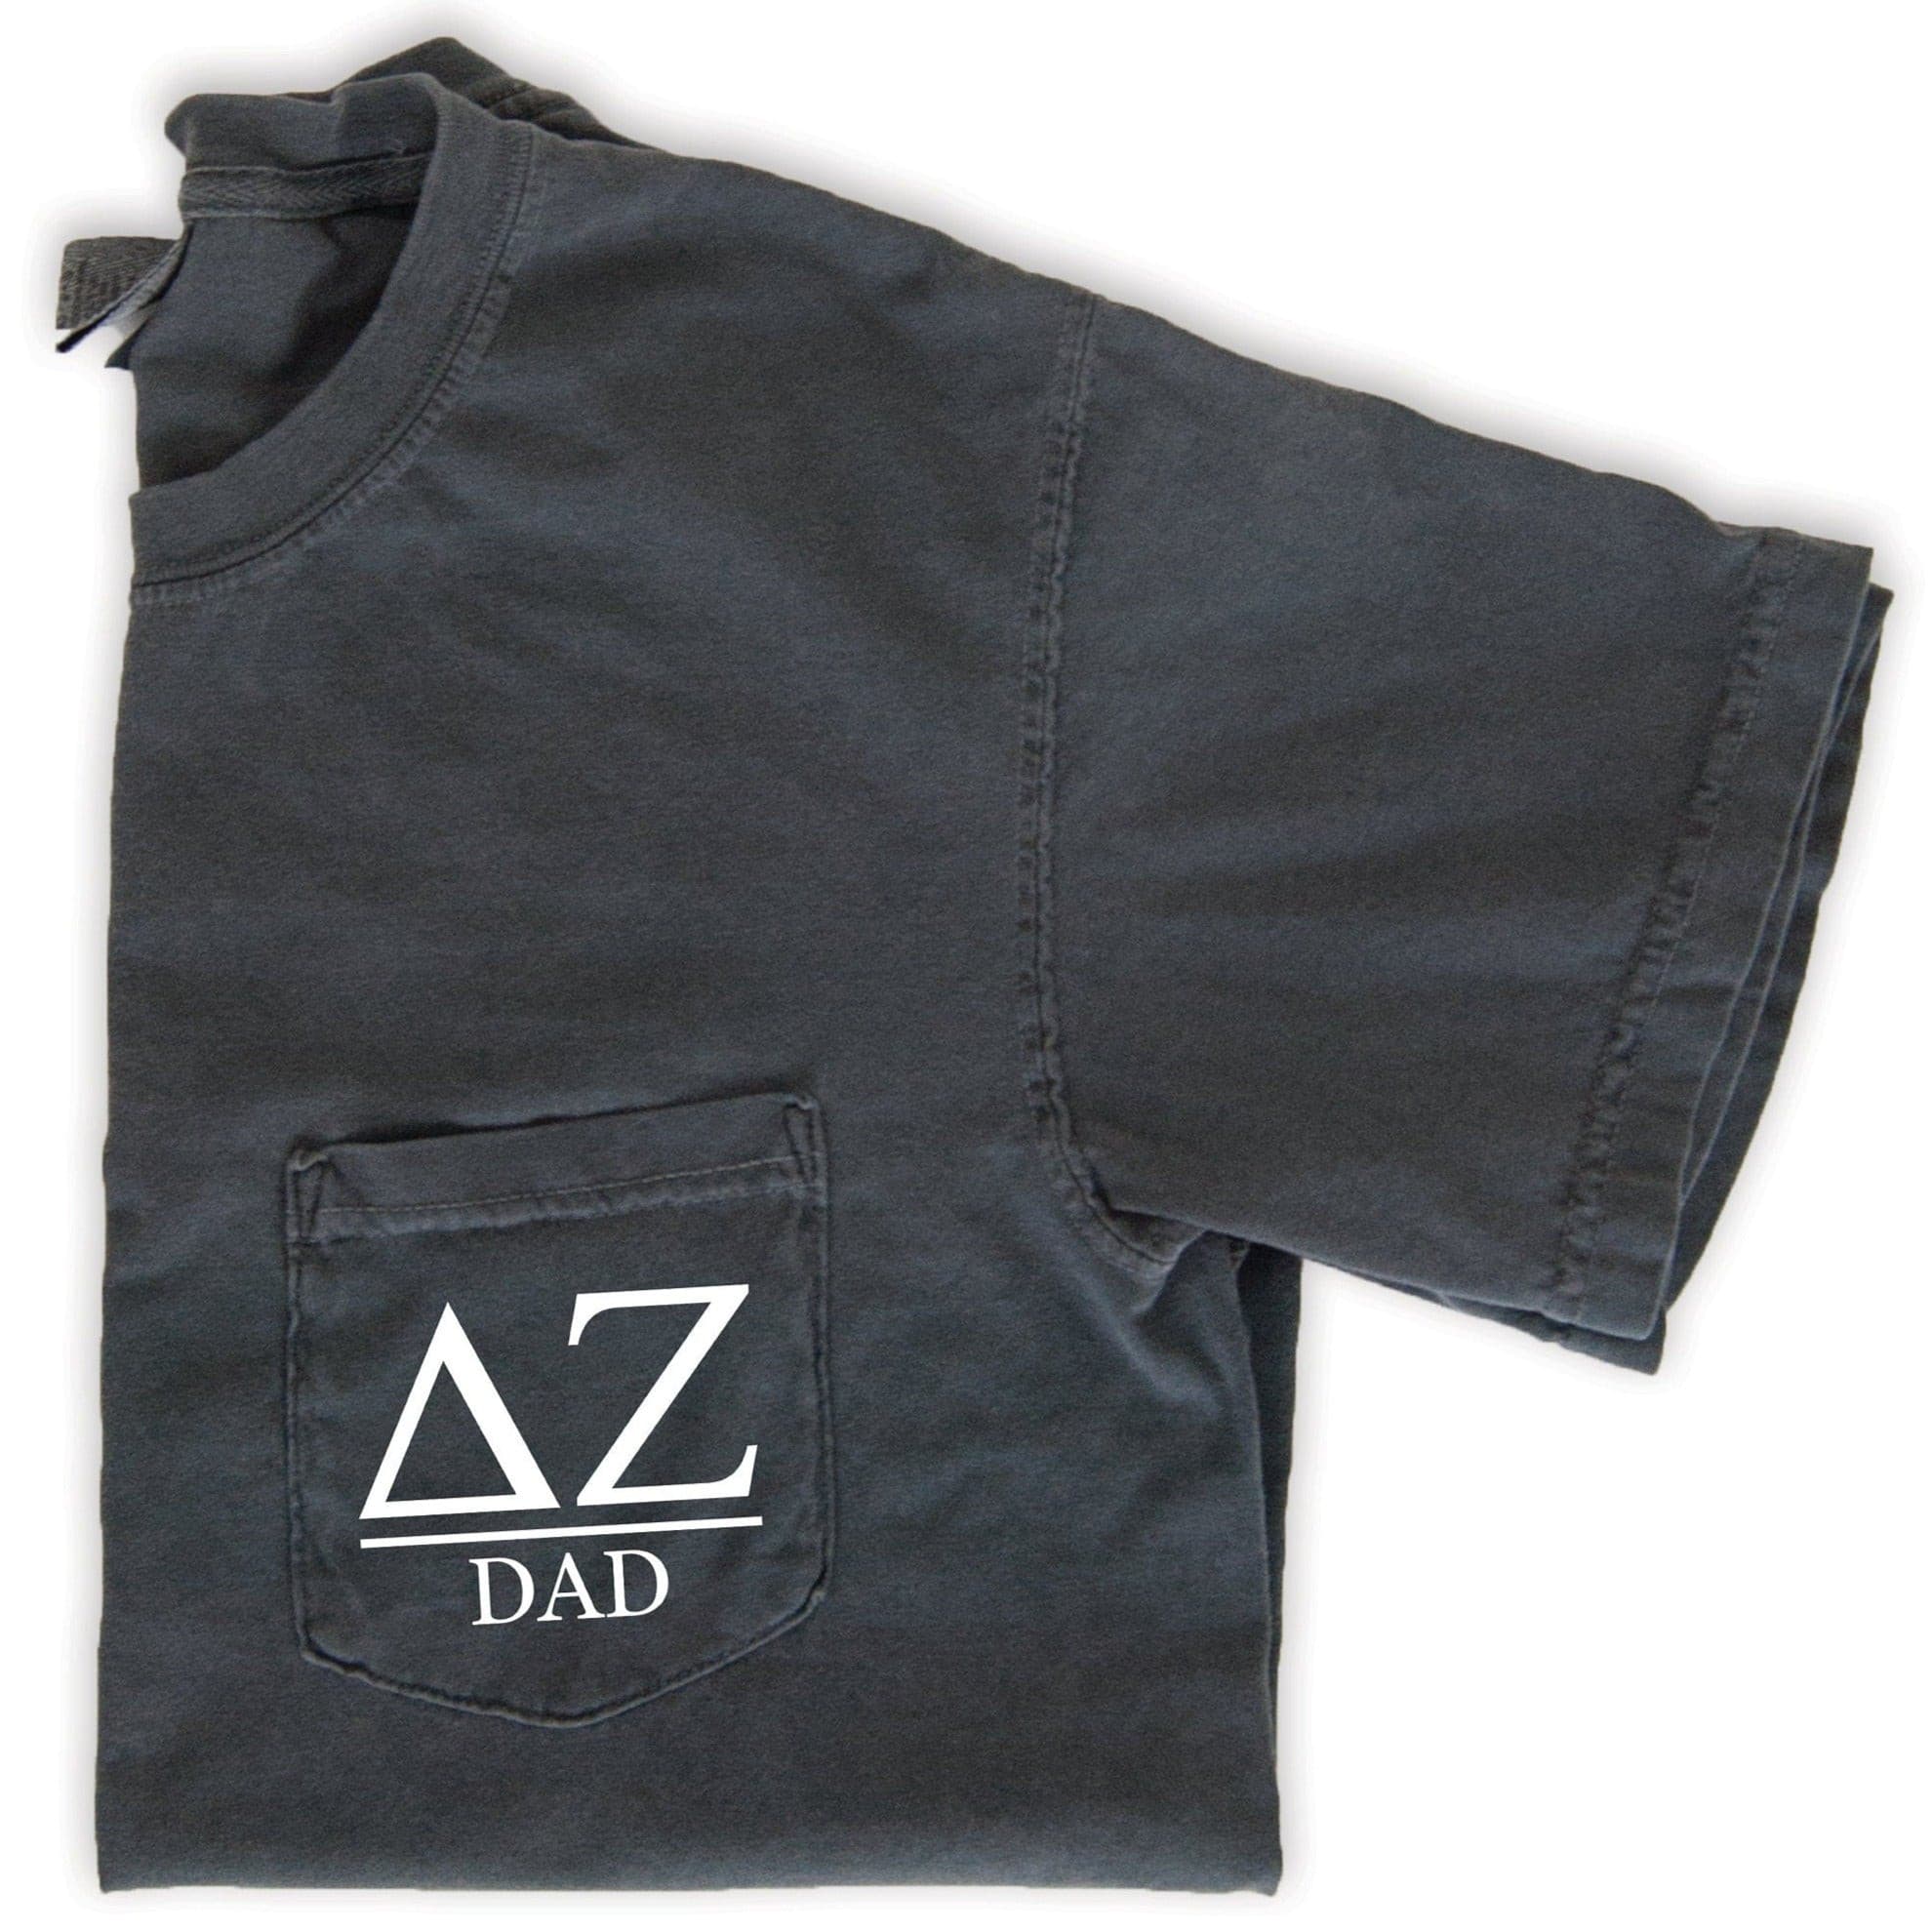 Delta Zeta Dad T-Shirt - Grey - Go Greek Chic